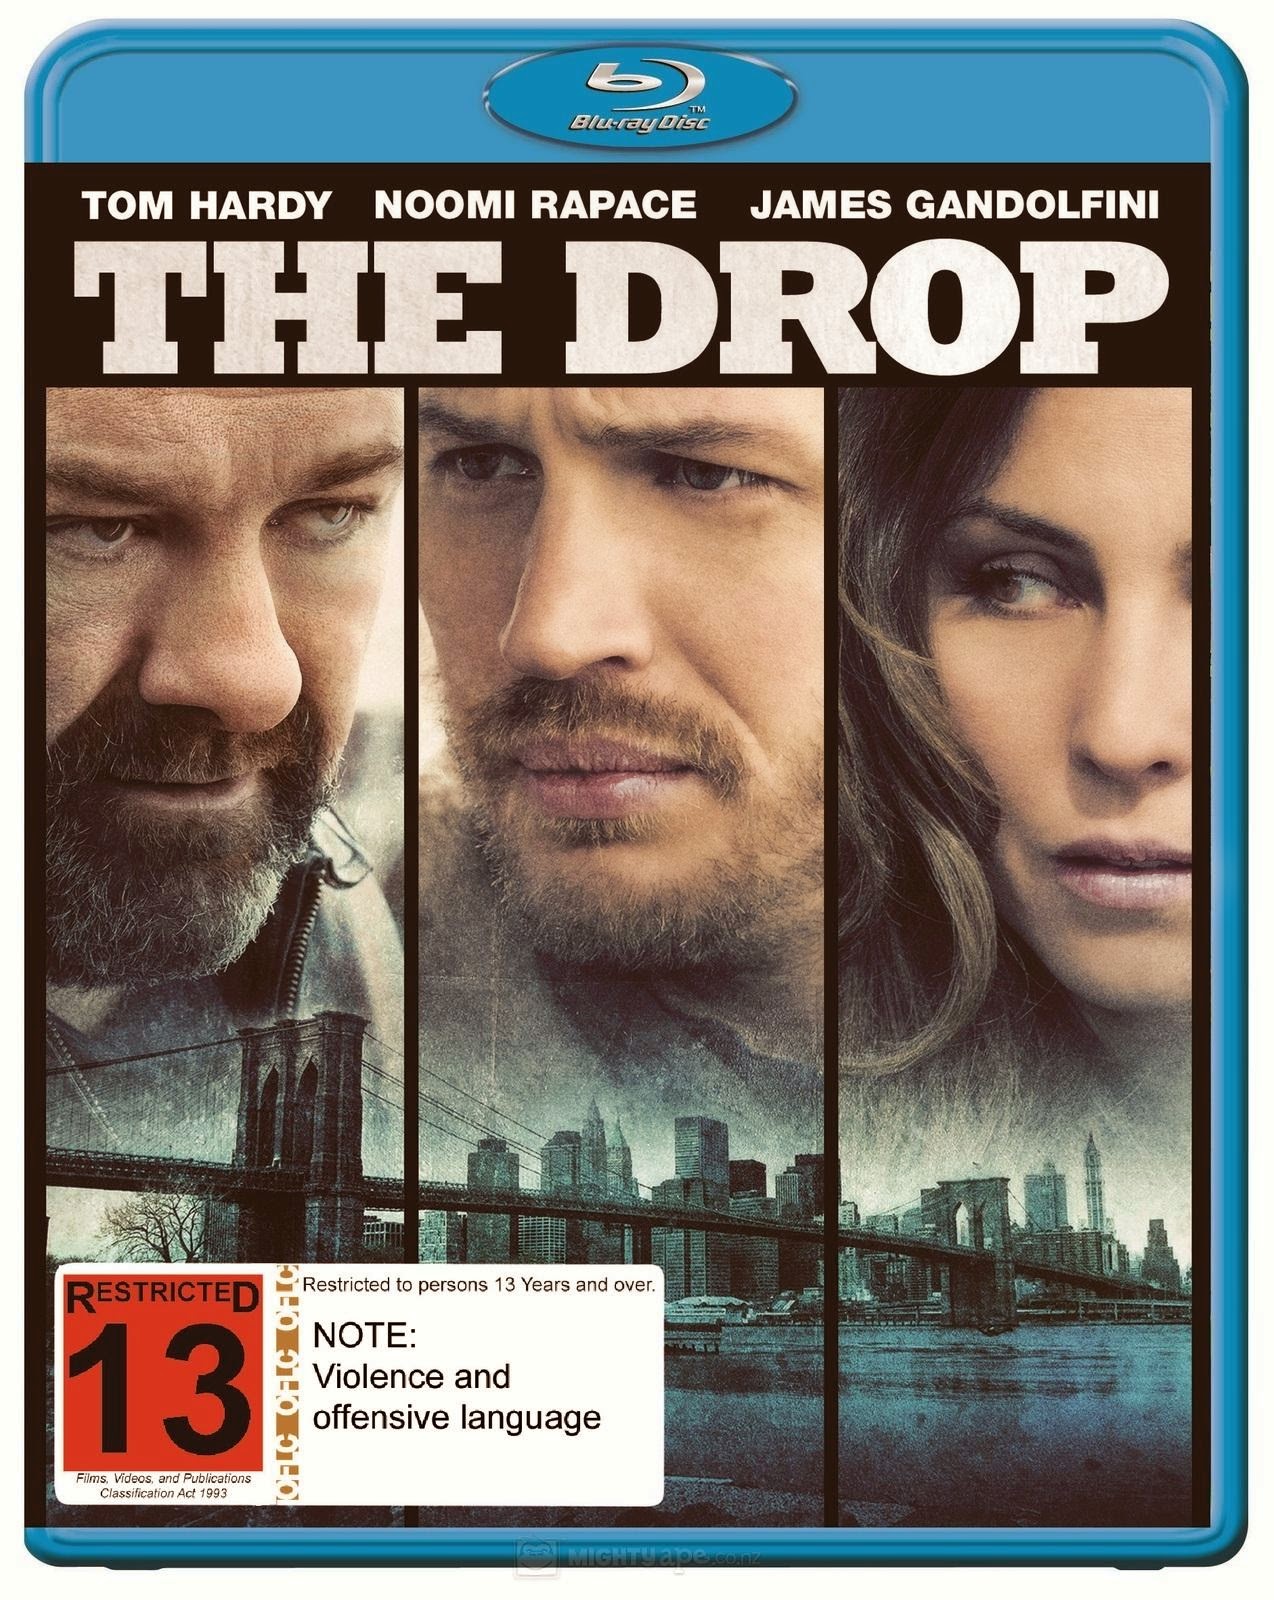 The Drop: Movie Review - James Gandolfini's Last Role